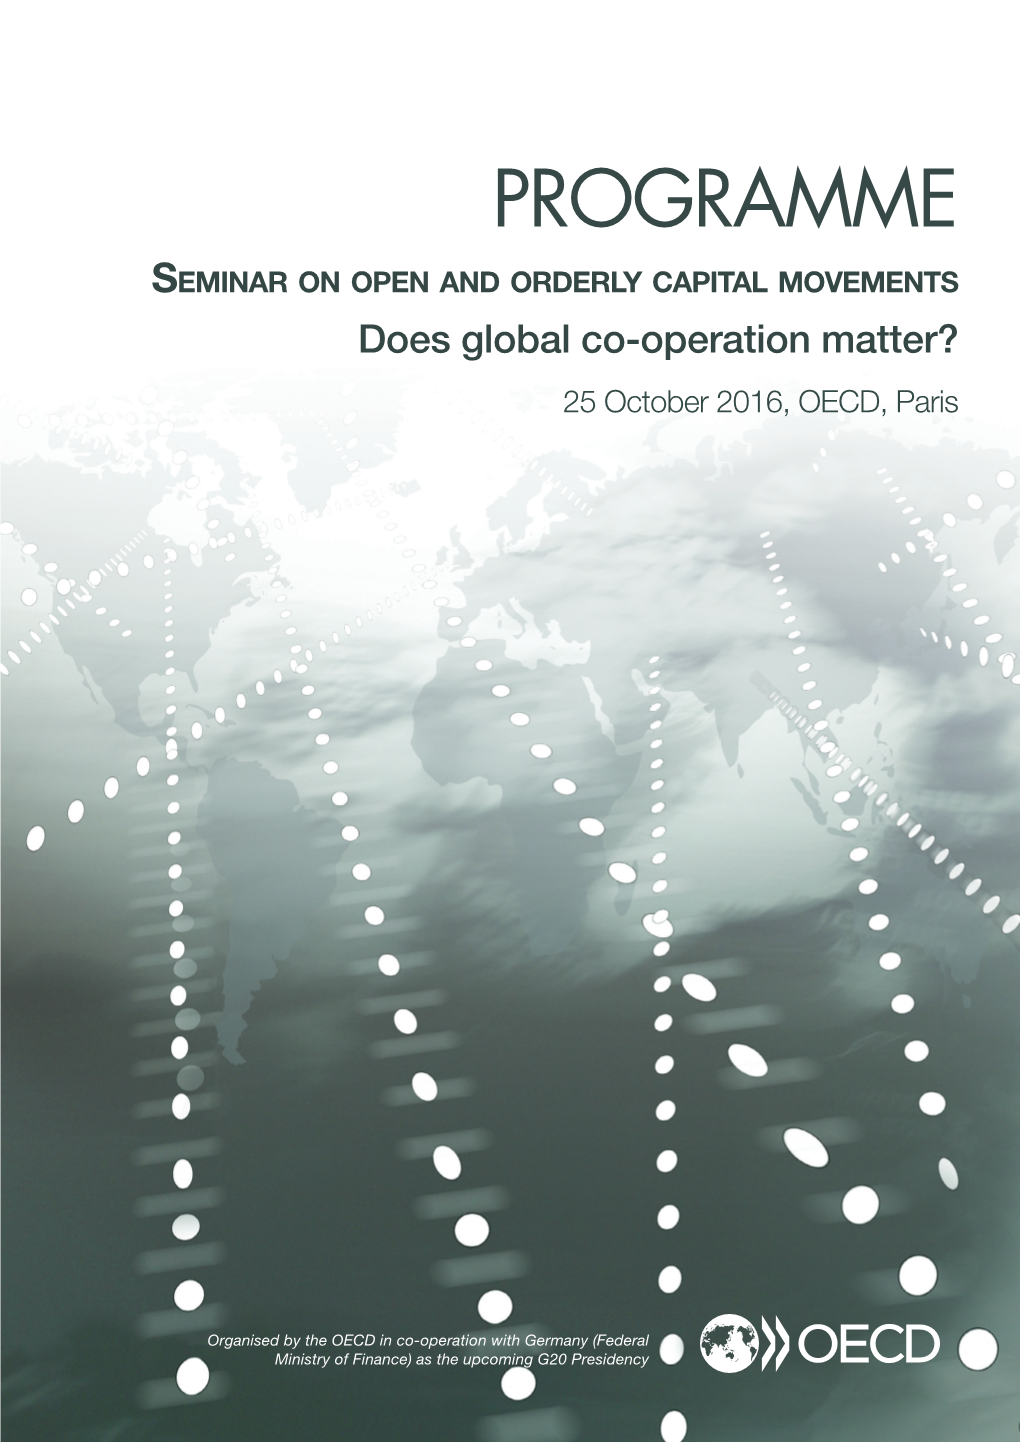 OECD, "Seminar on Capital Movements Agenda,"